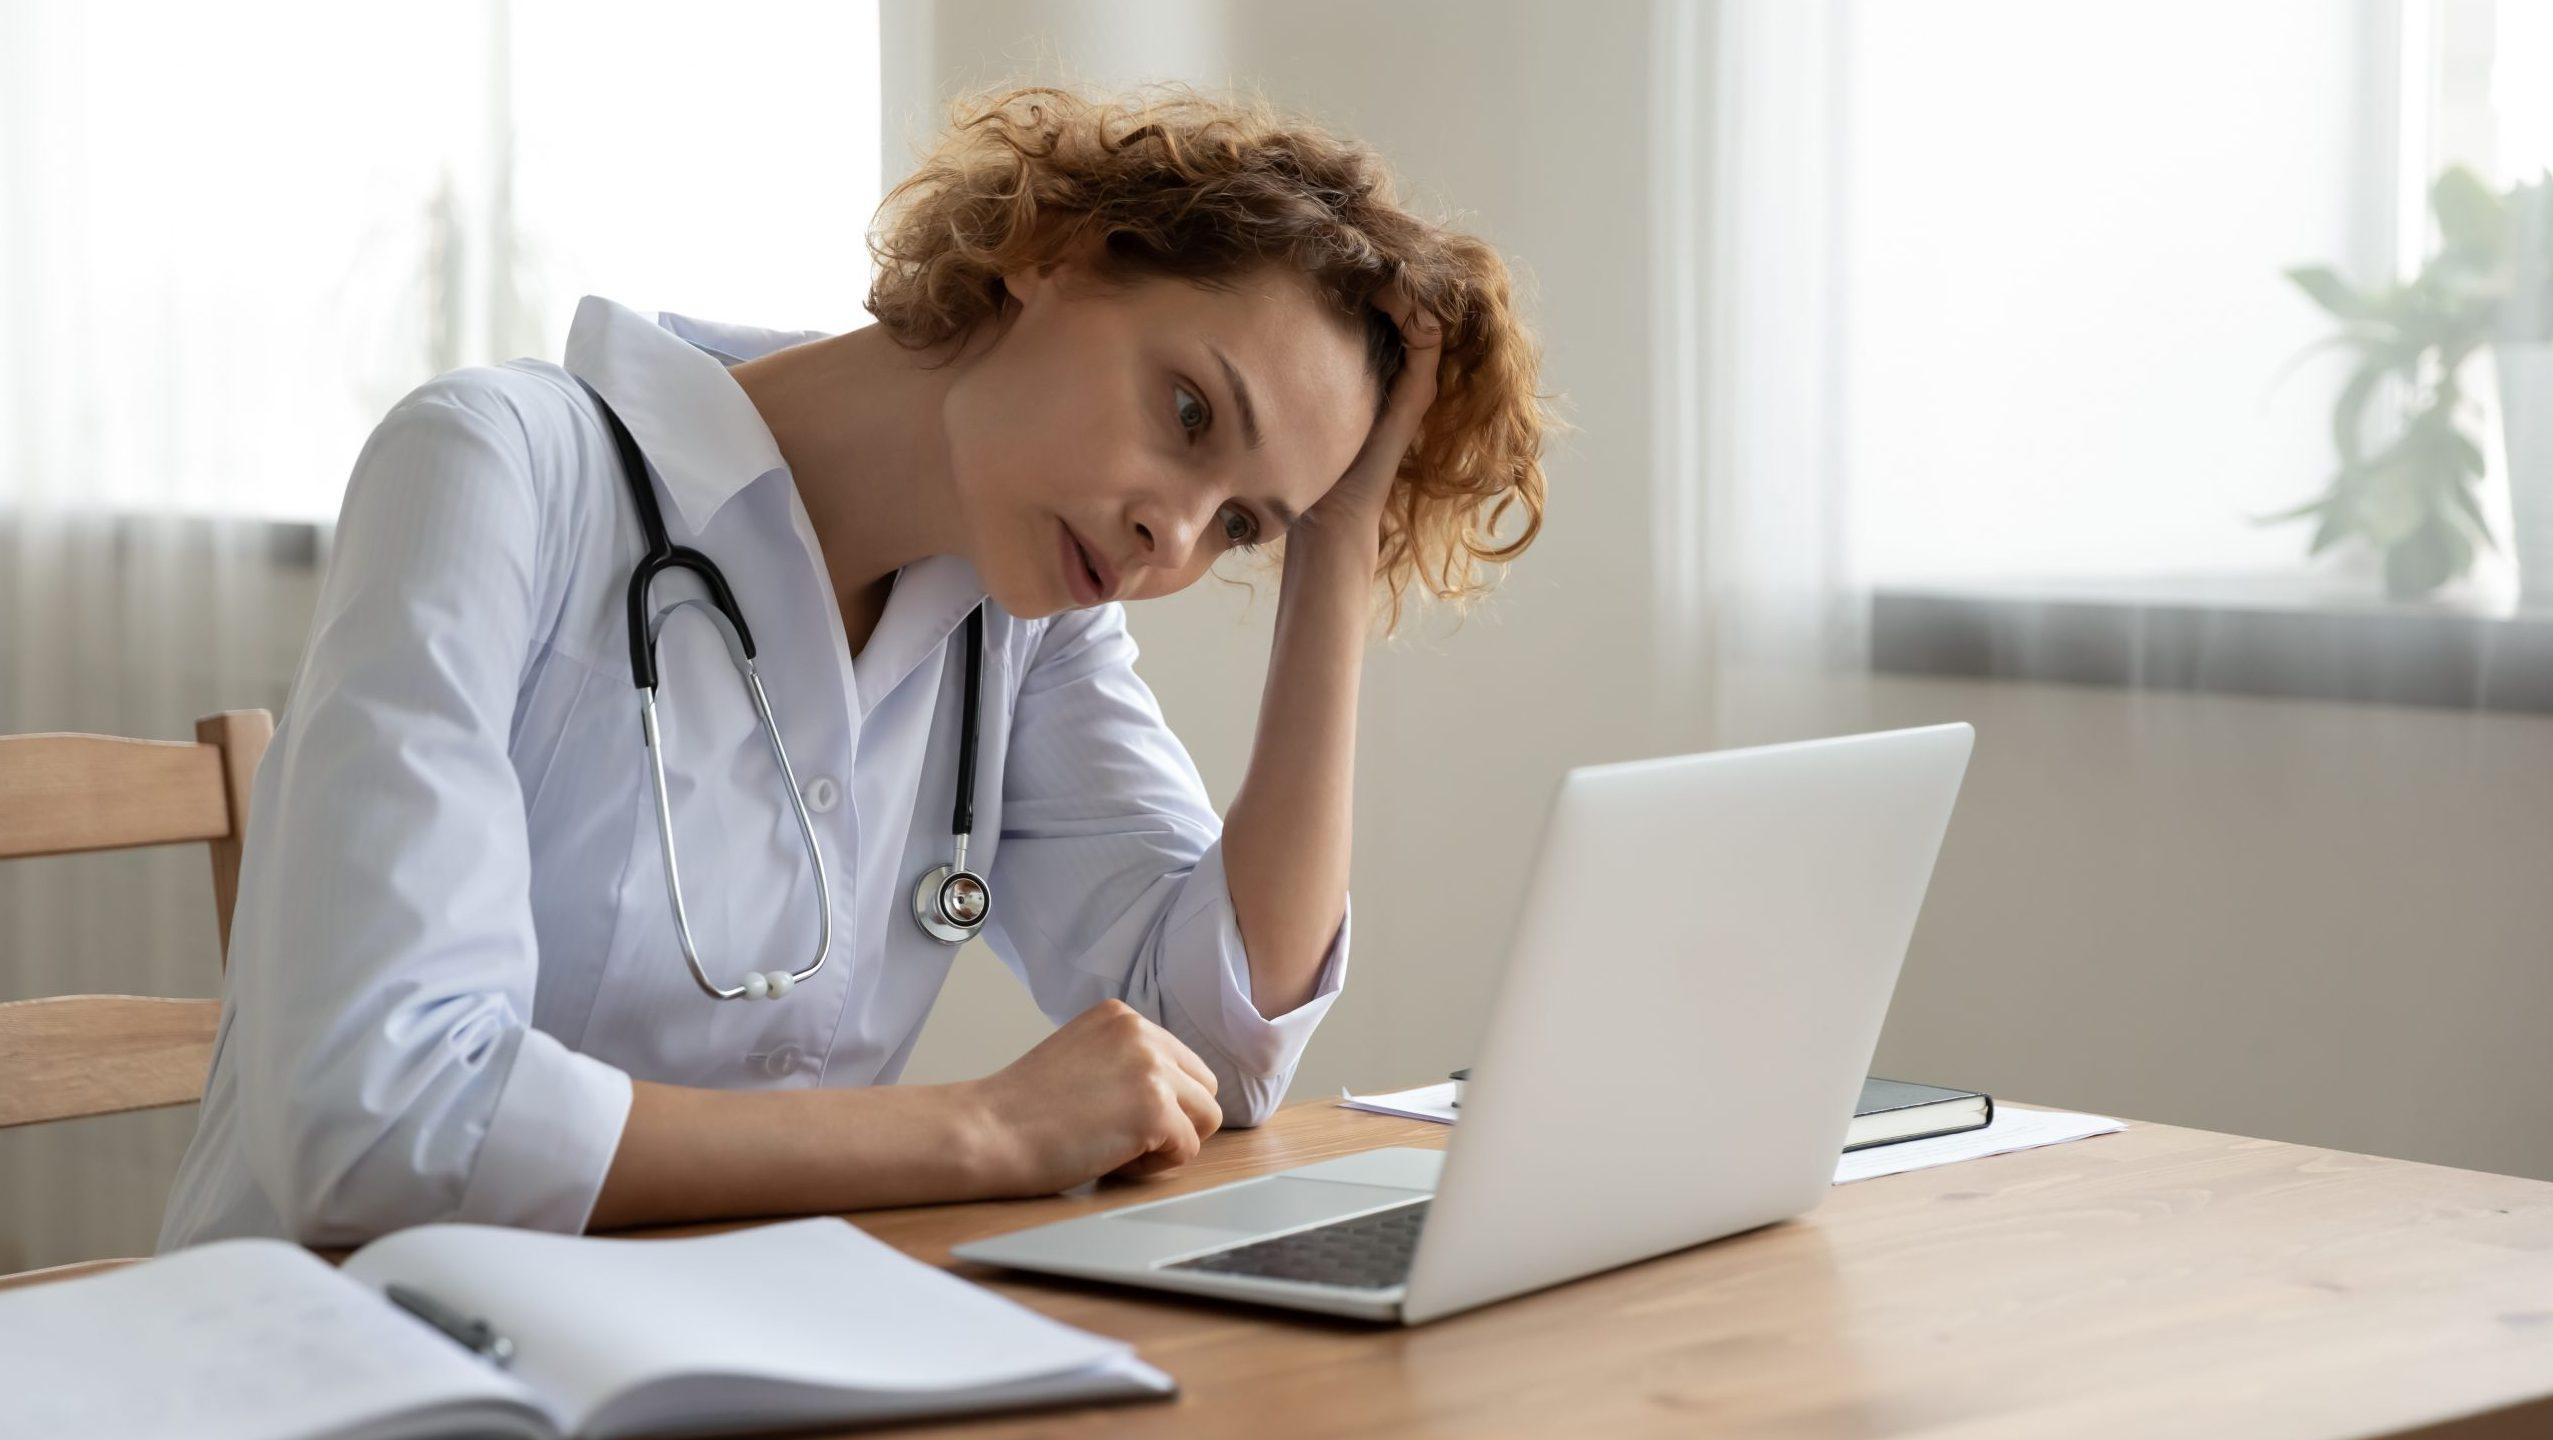 Can Health IT Prevent Clinician Burnout Through Digital Tools?